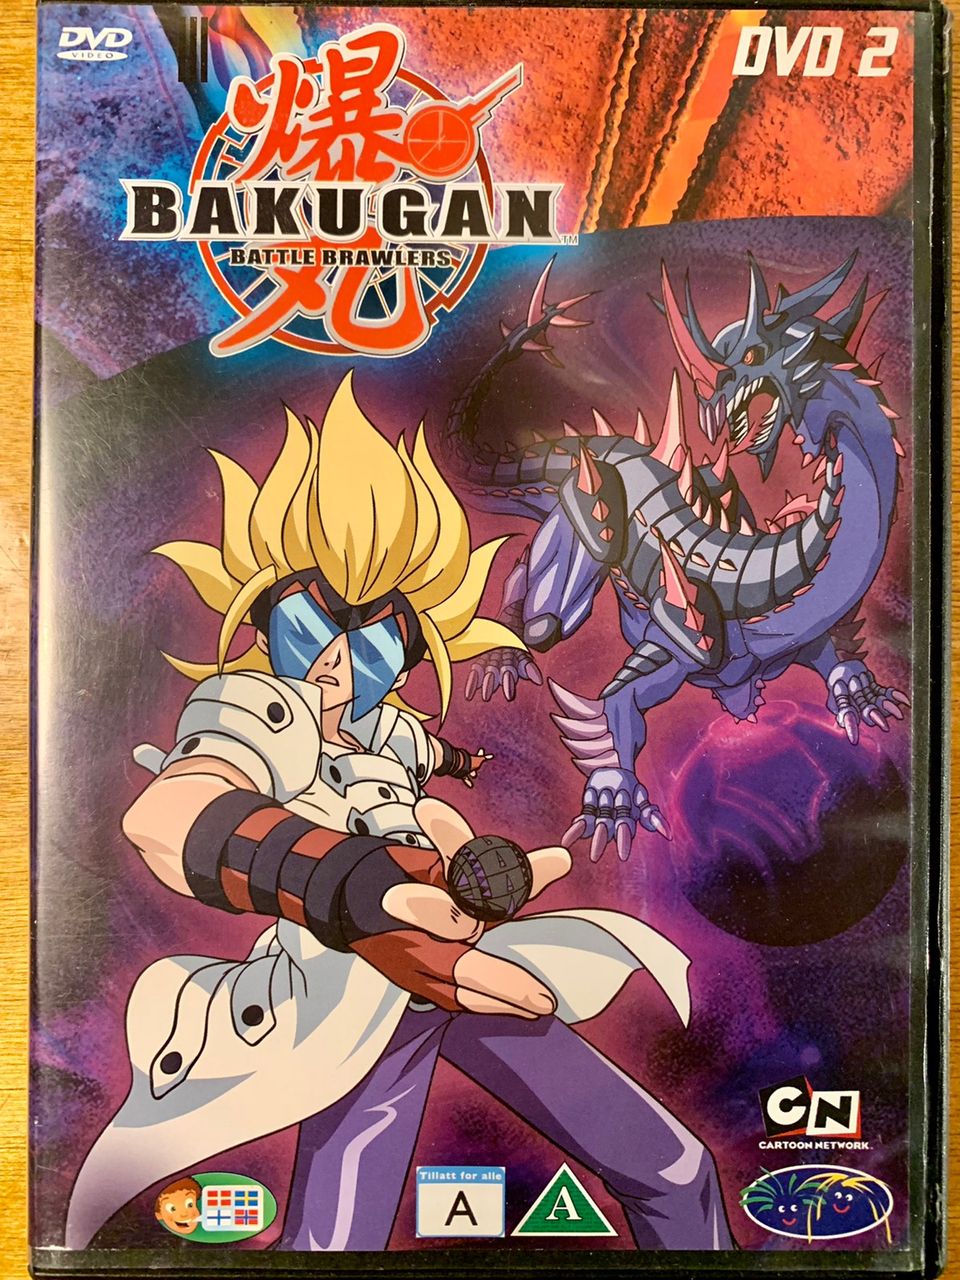 Bakugan Battle Brawlers 2 DVD anime